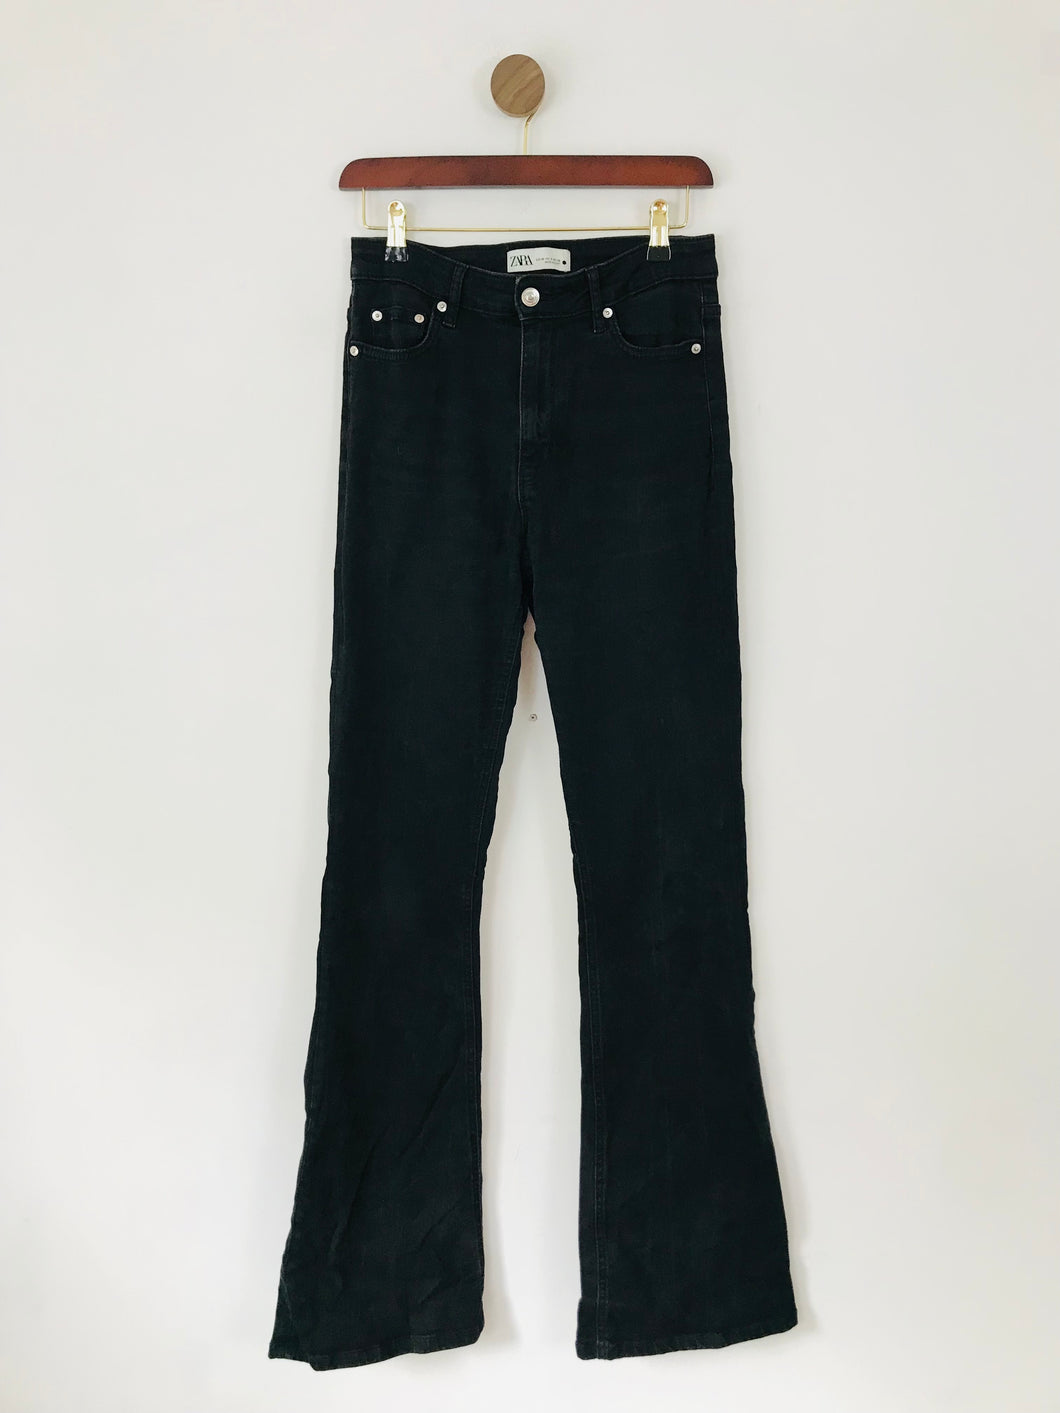 Zara Women's High Waisted Flare Jeans | UK10 | Black